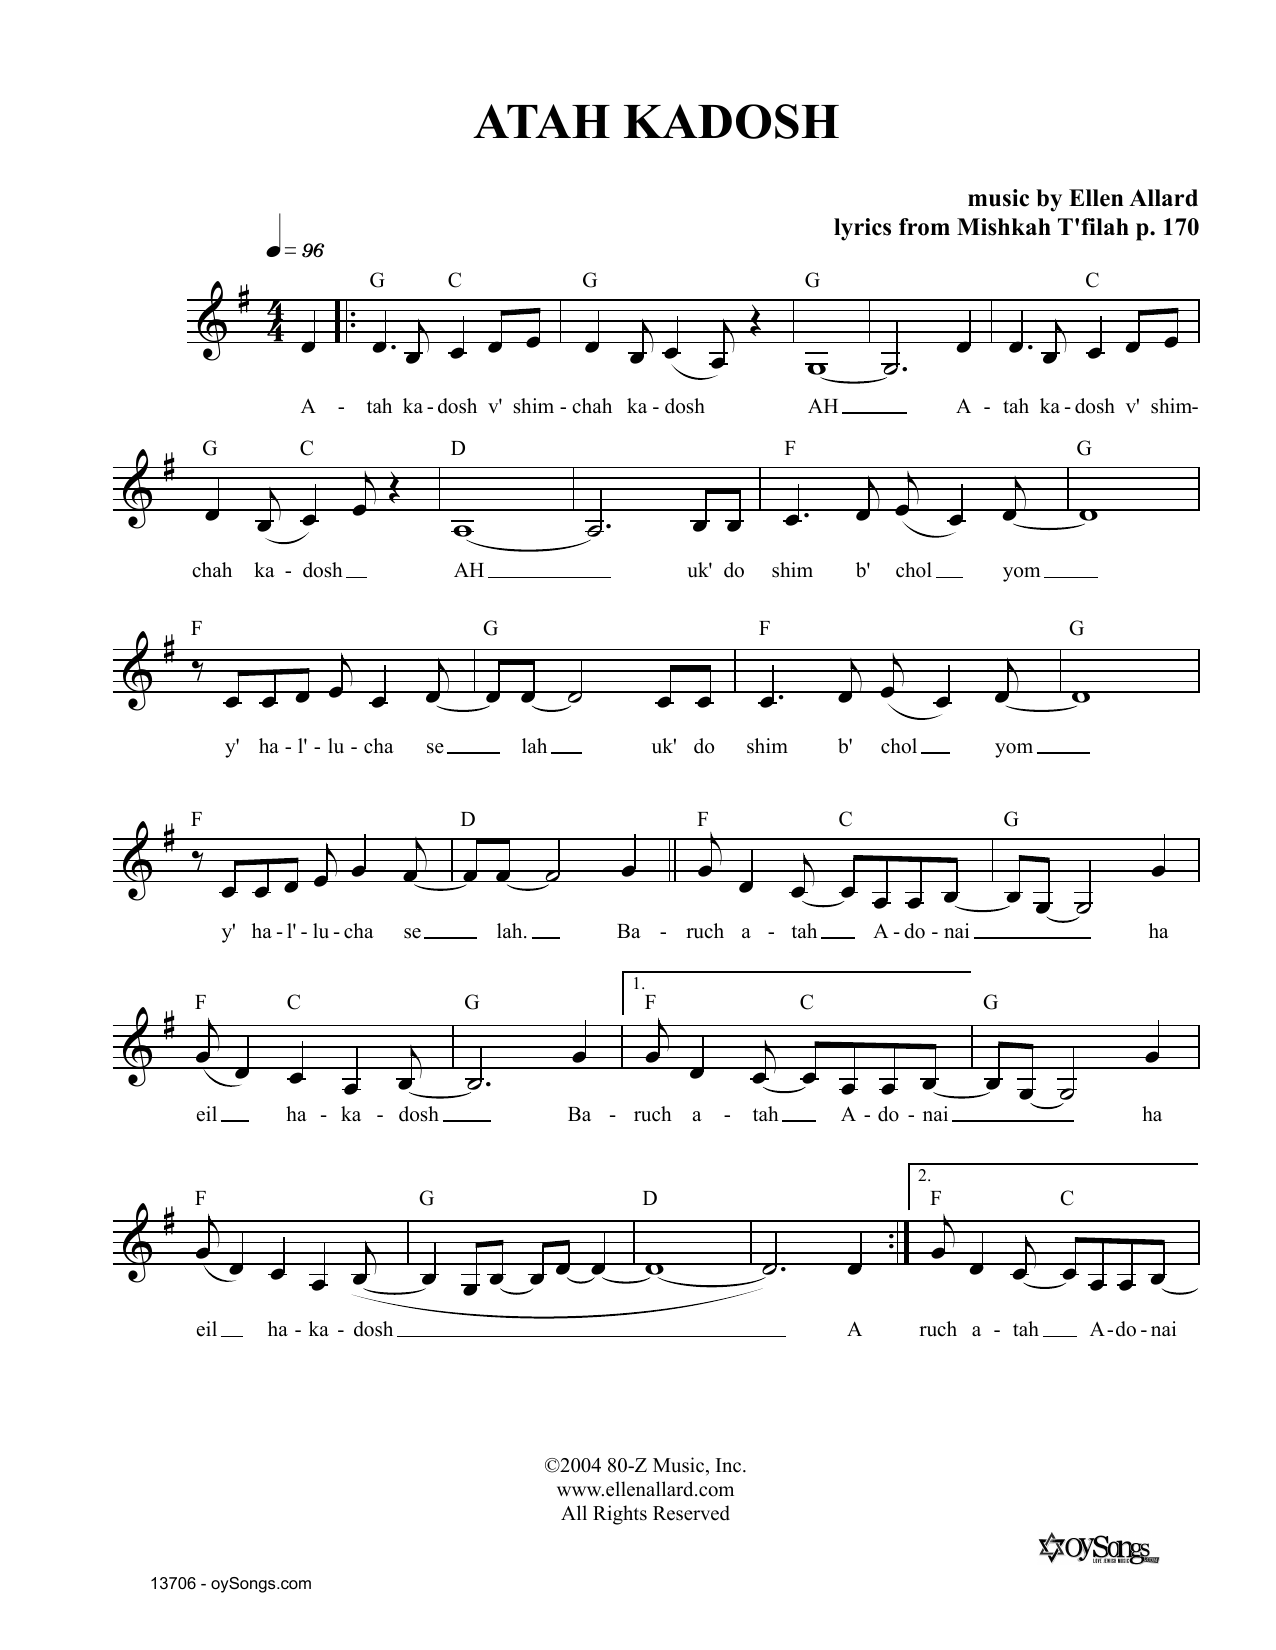 Download Ellen Allard Atah Kadosh Sheet Music and learn how to play Melody Line, Lyrics & Chords PDF digital score in minutes